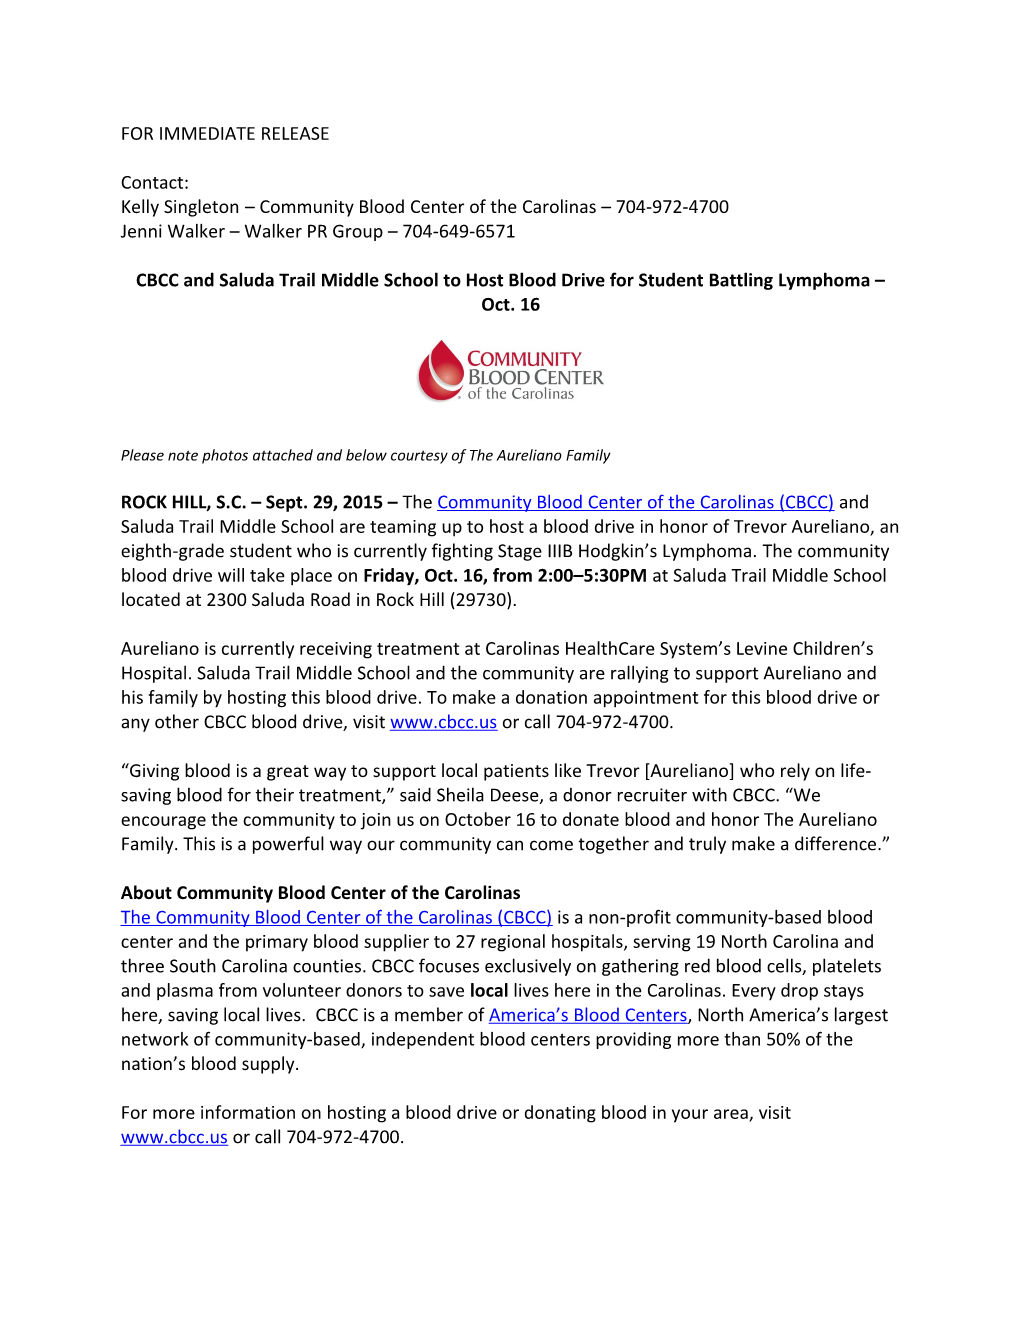 Kelly Singleton Community Blood Center of the Carolinas 704-972-4700